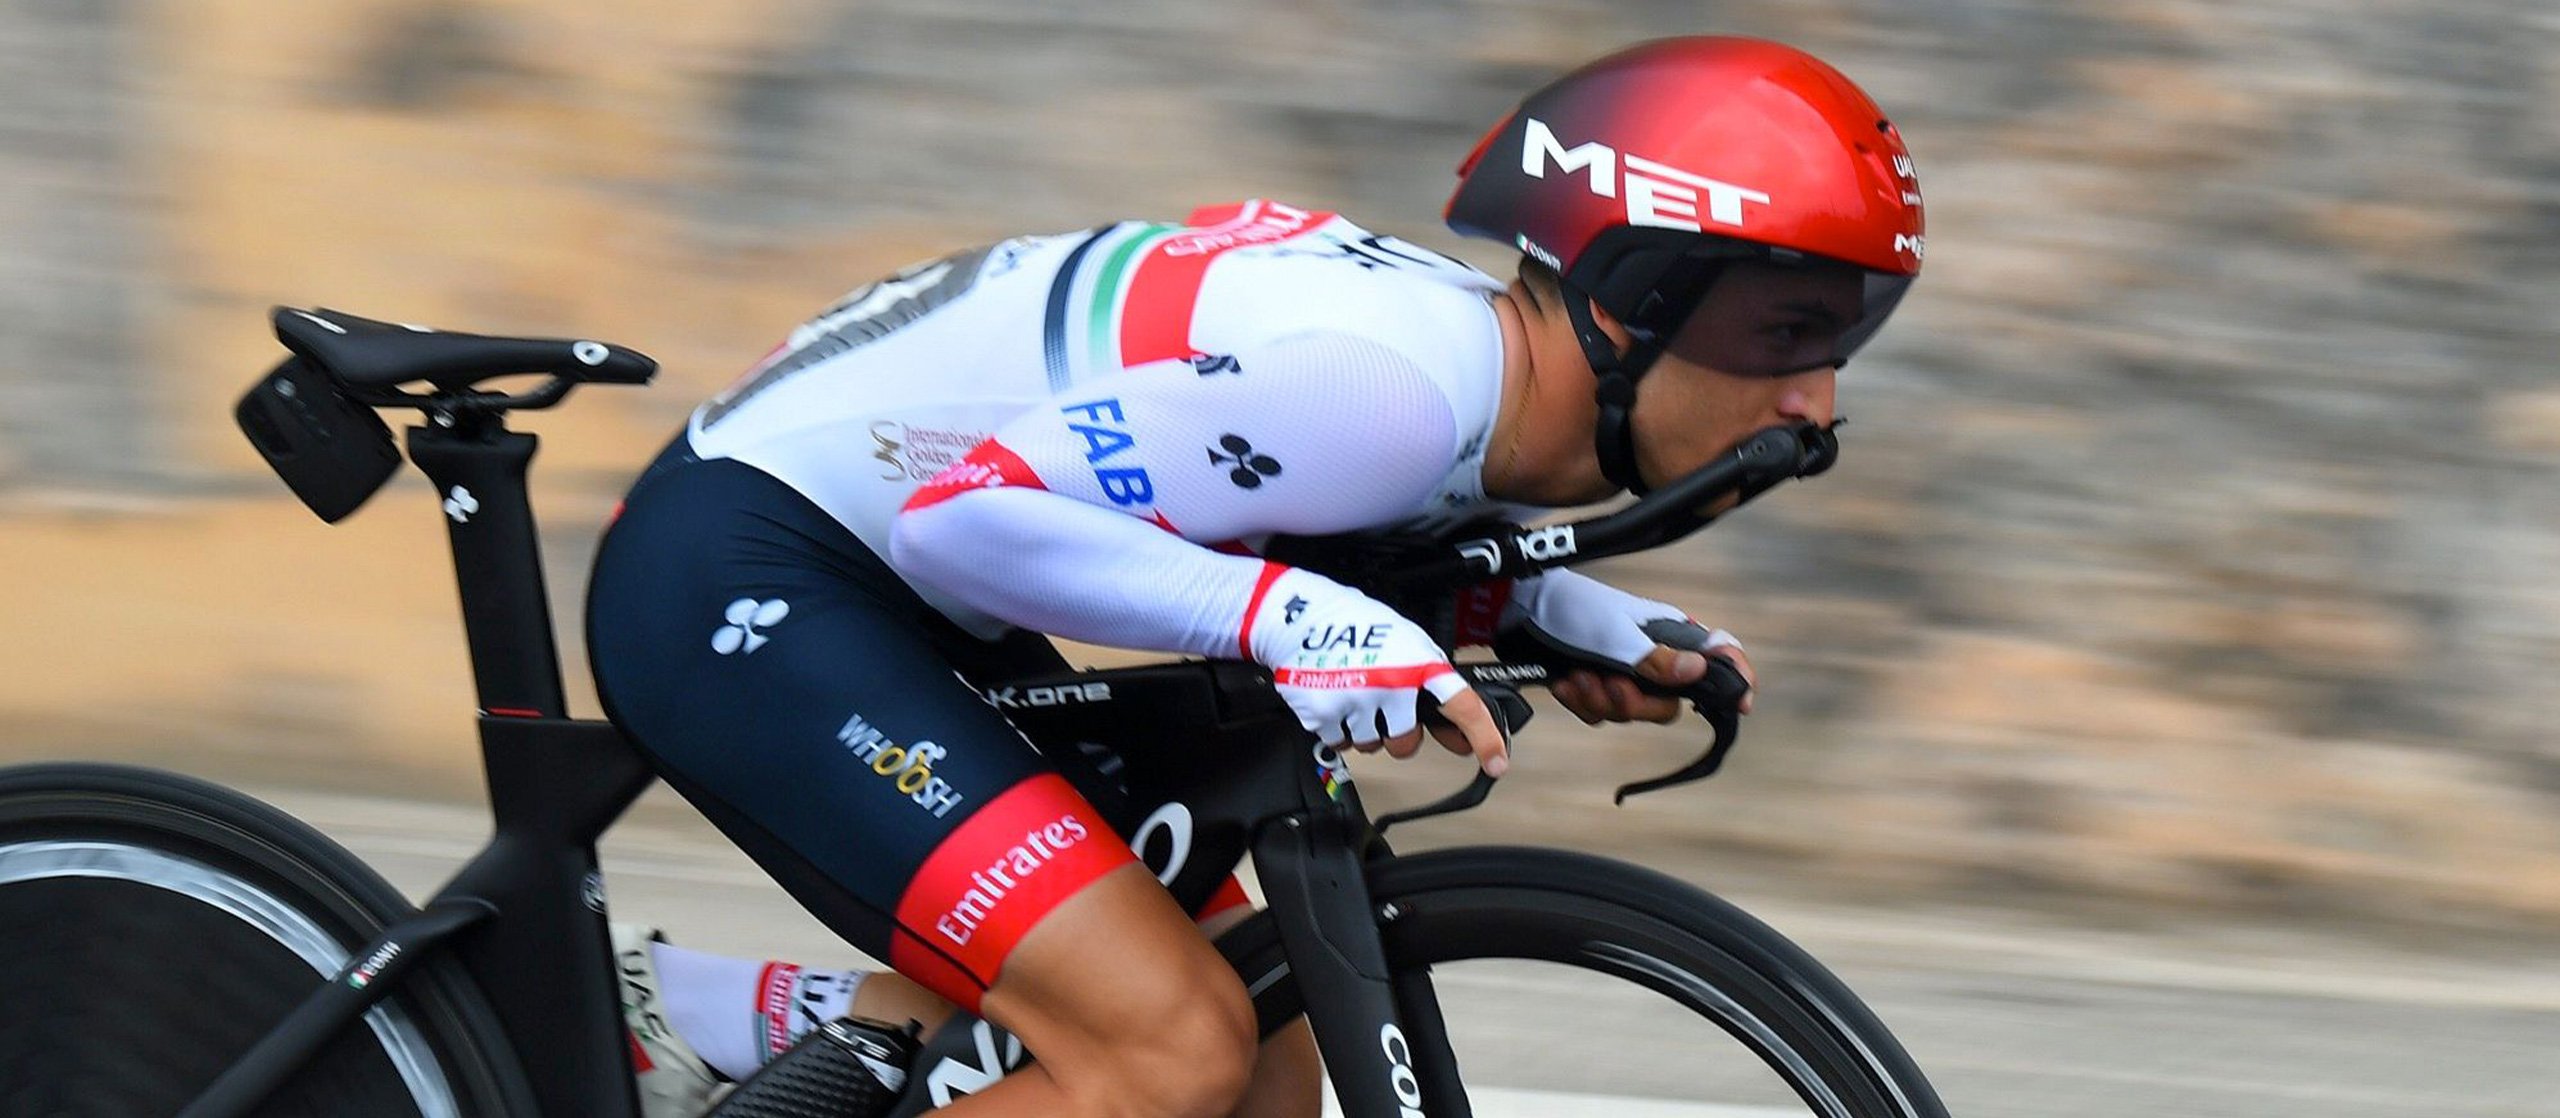 MET Helmets Giro d'Italia UAE Team Emirates